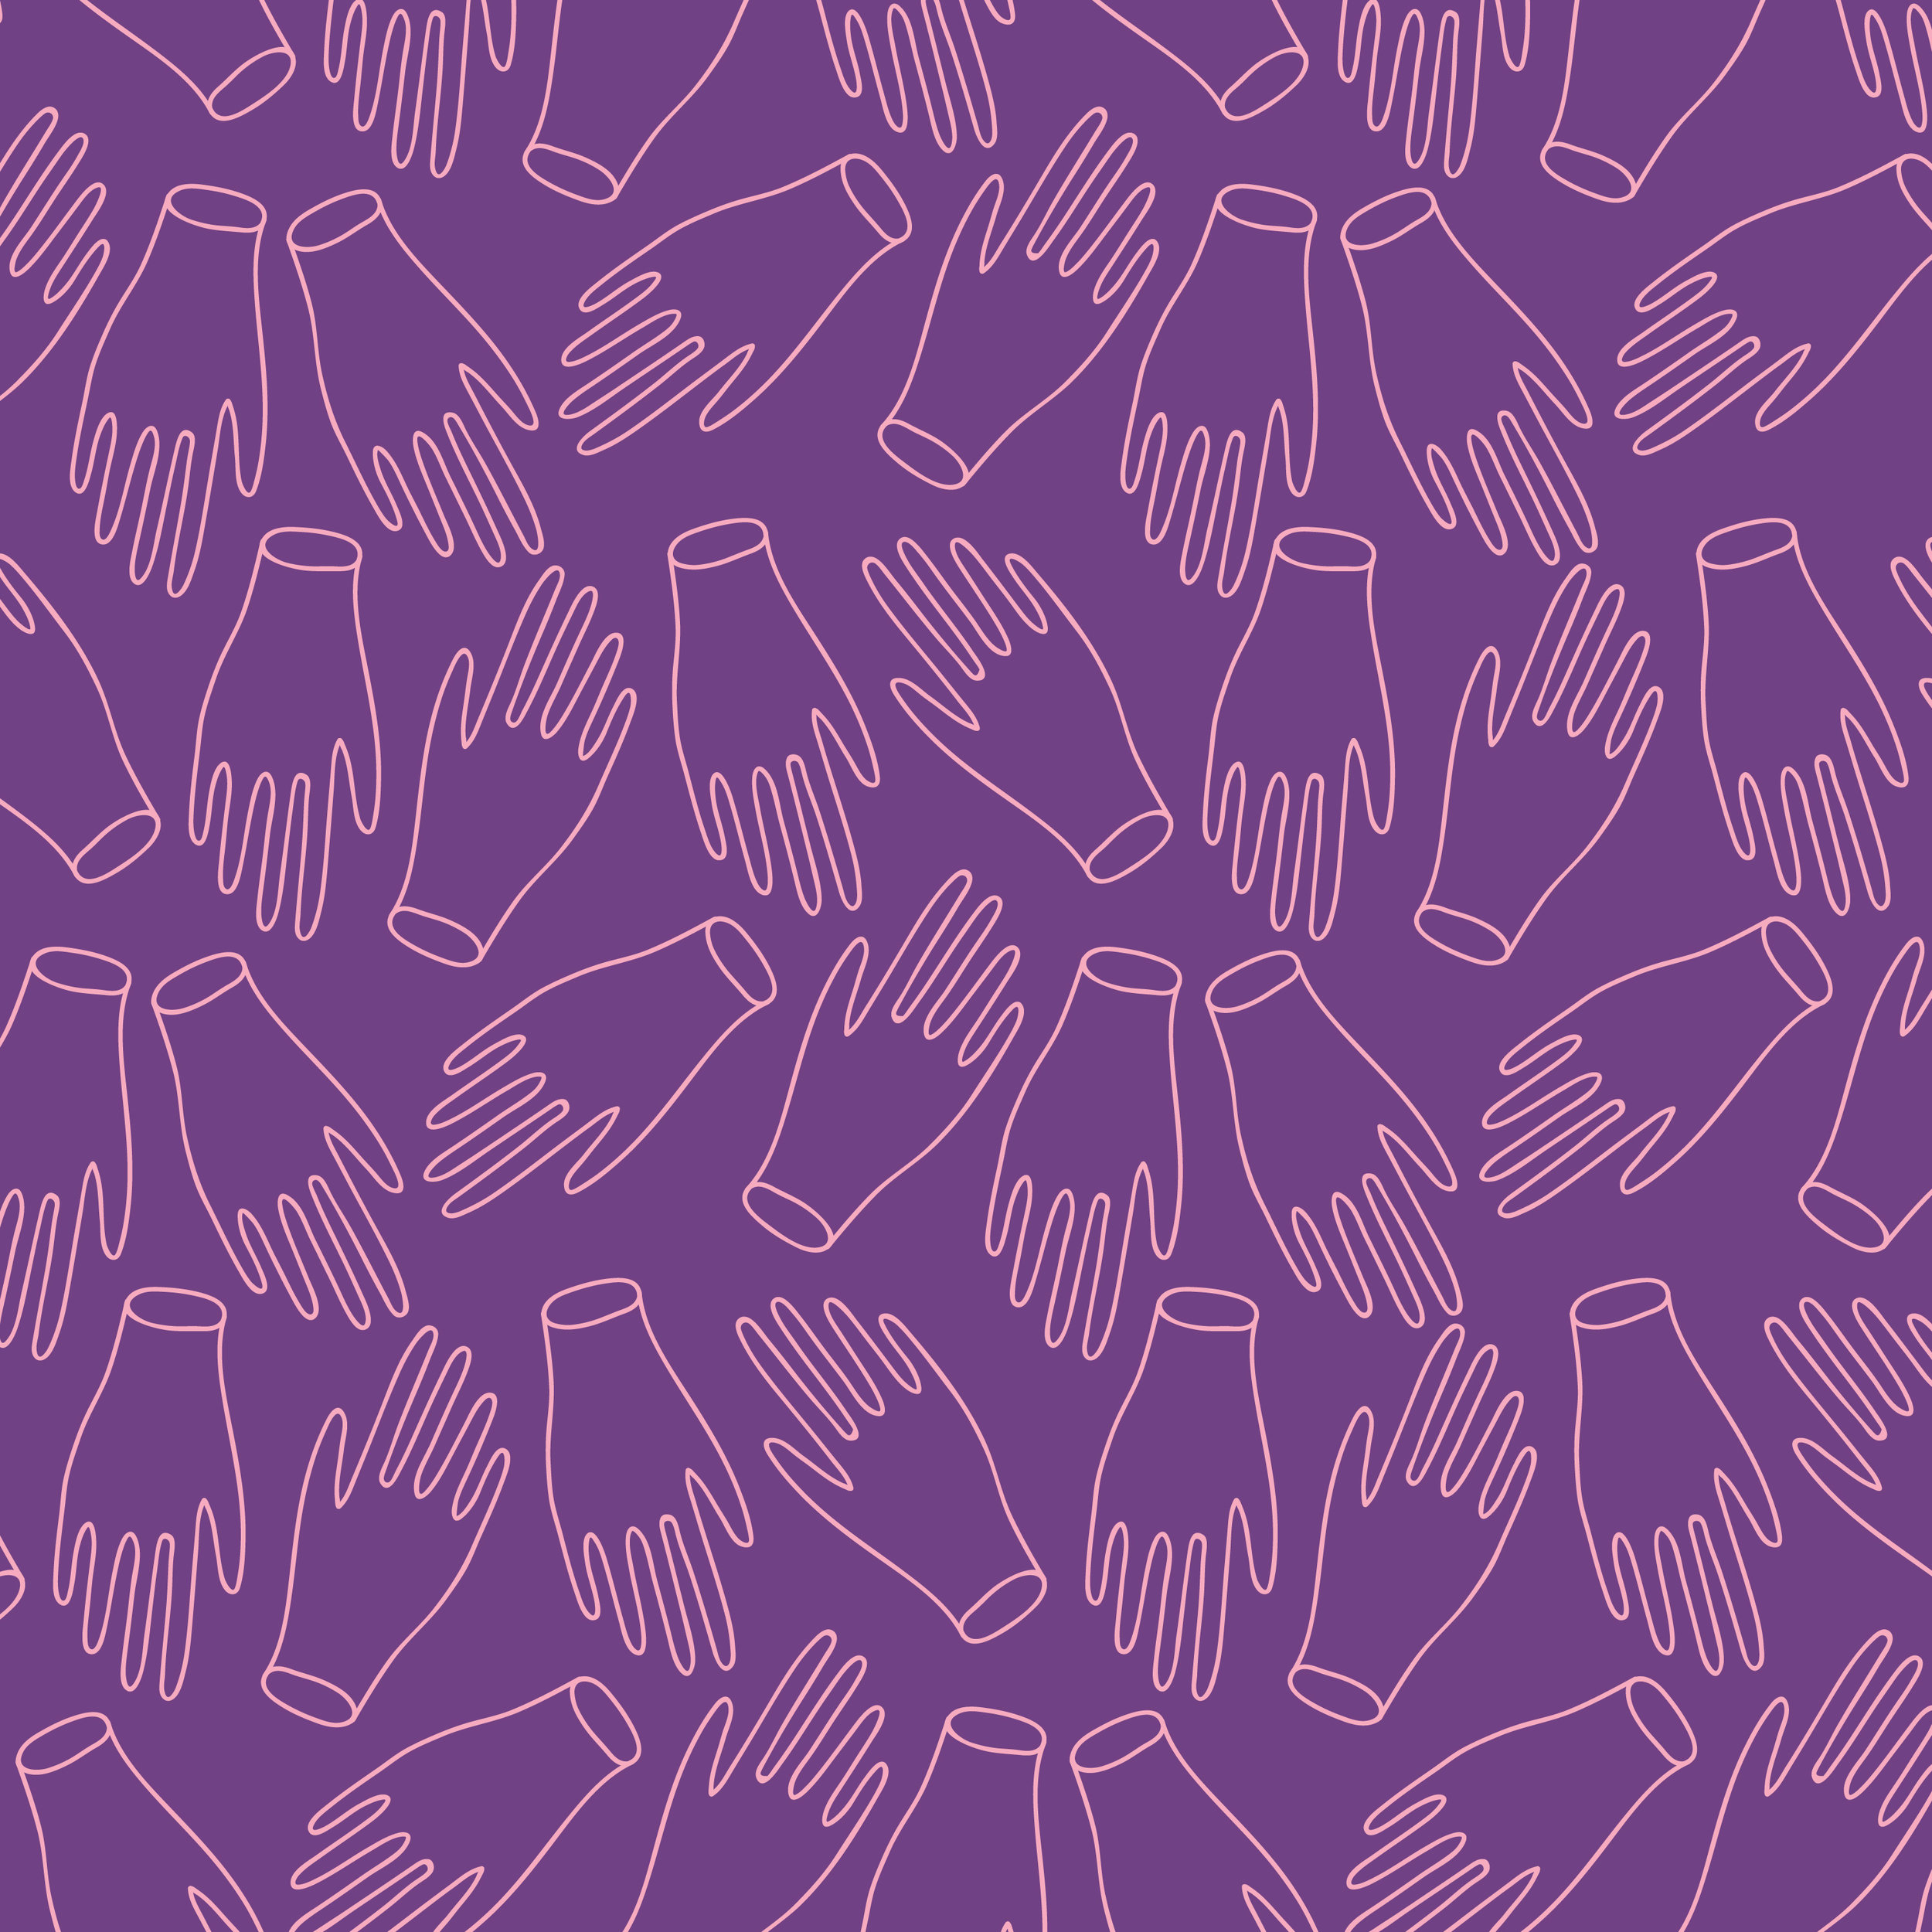 hands_pattern-01.jpg